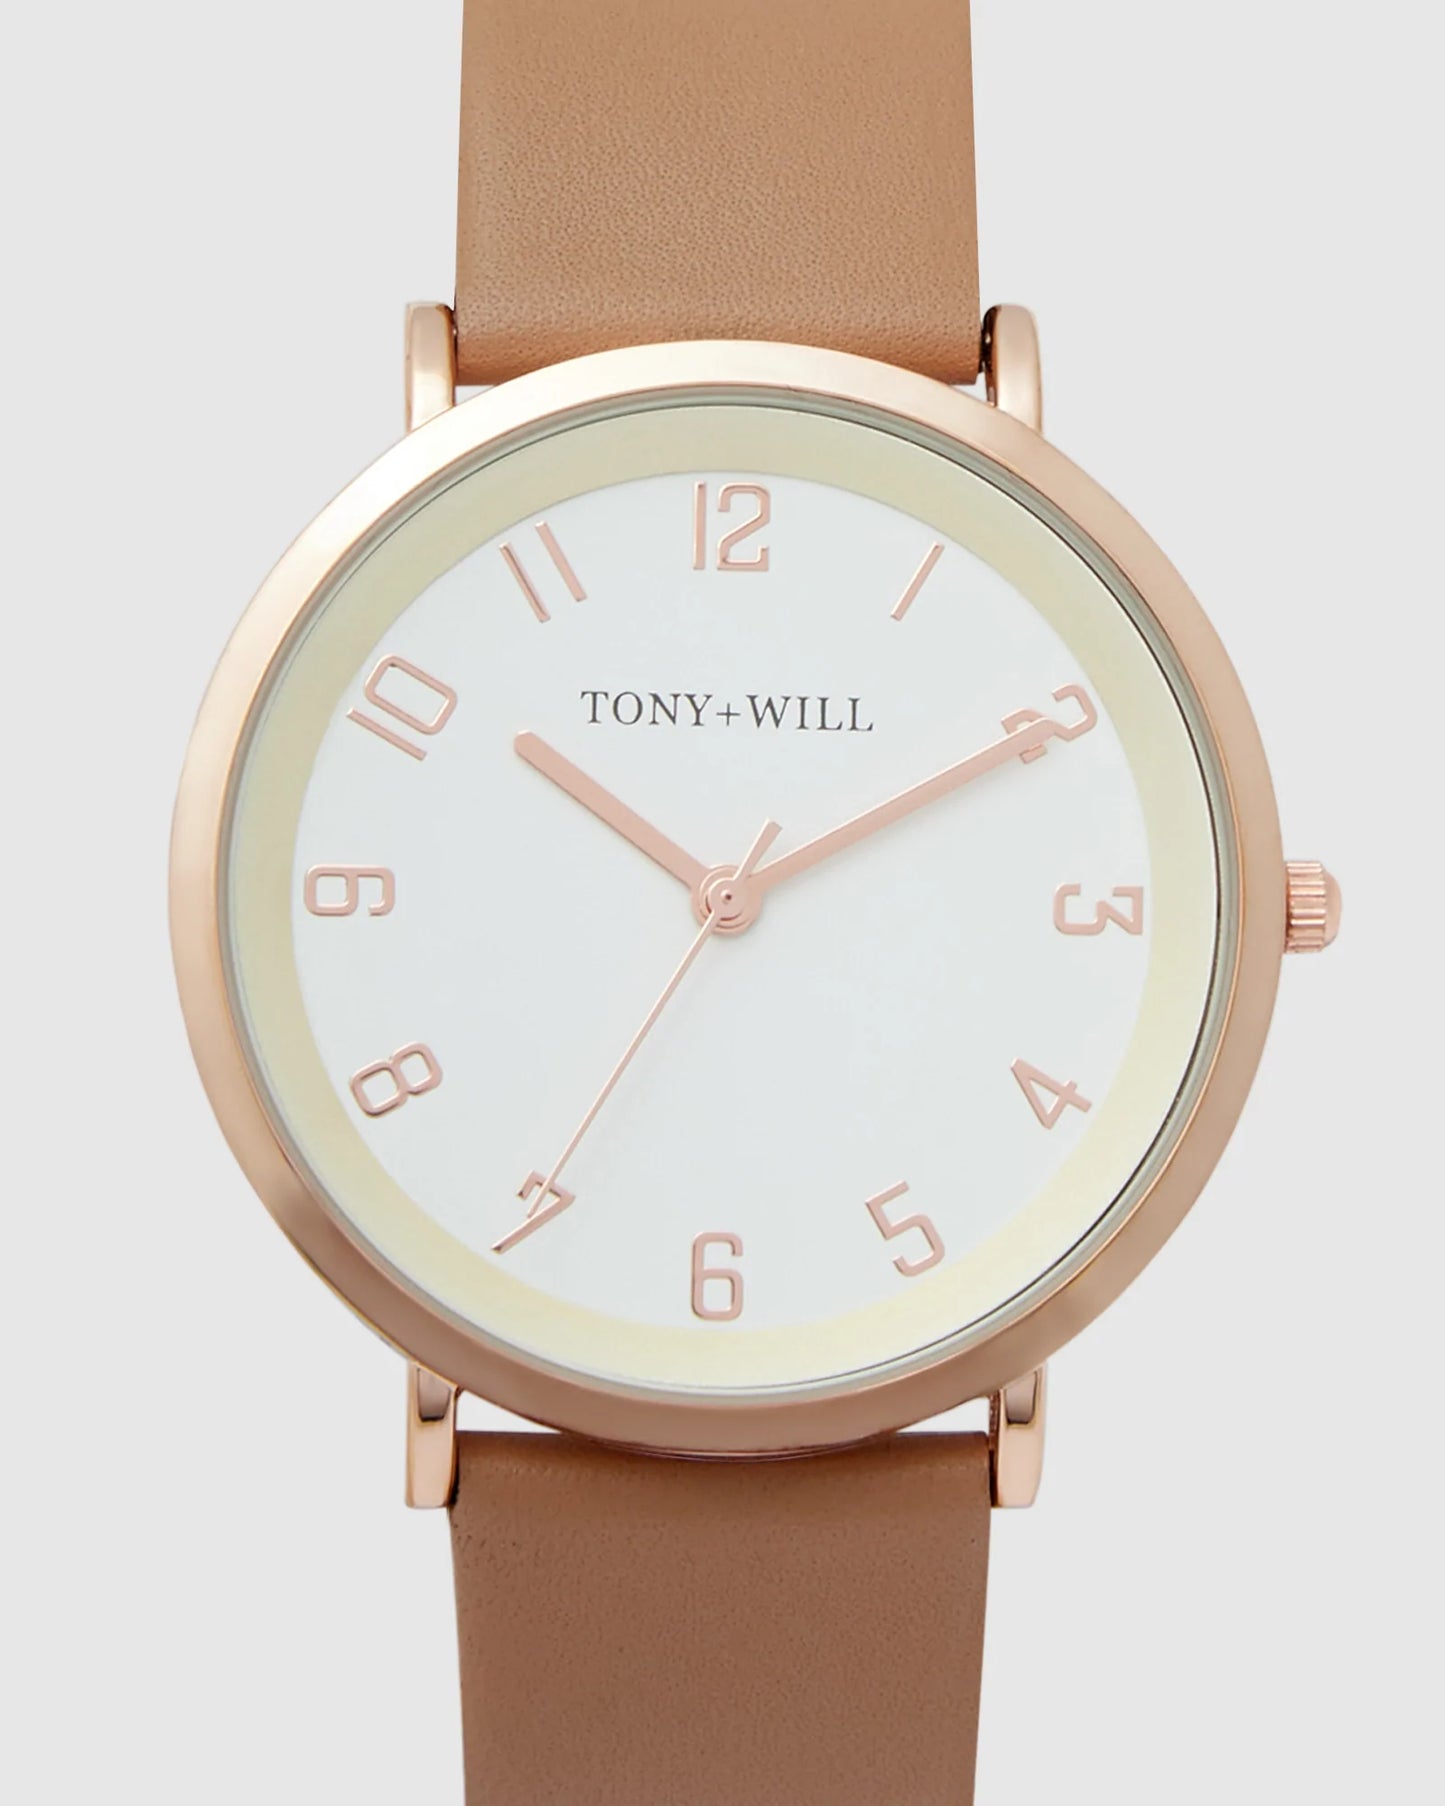 Tony + Will Austral Watch